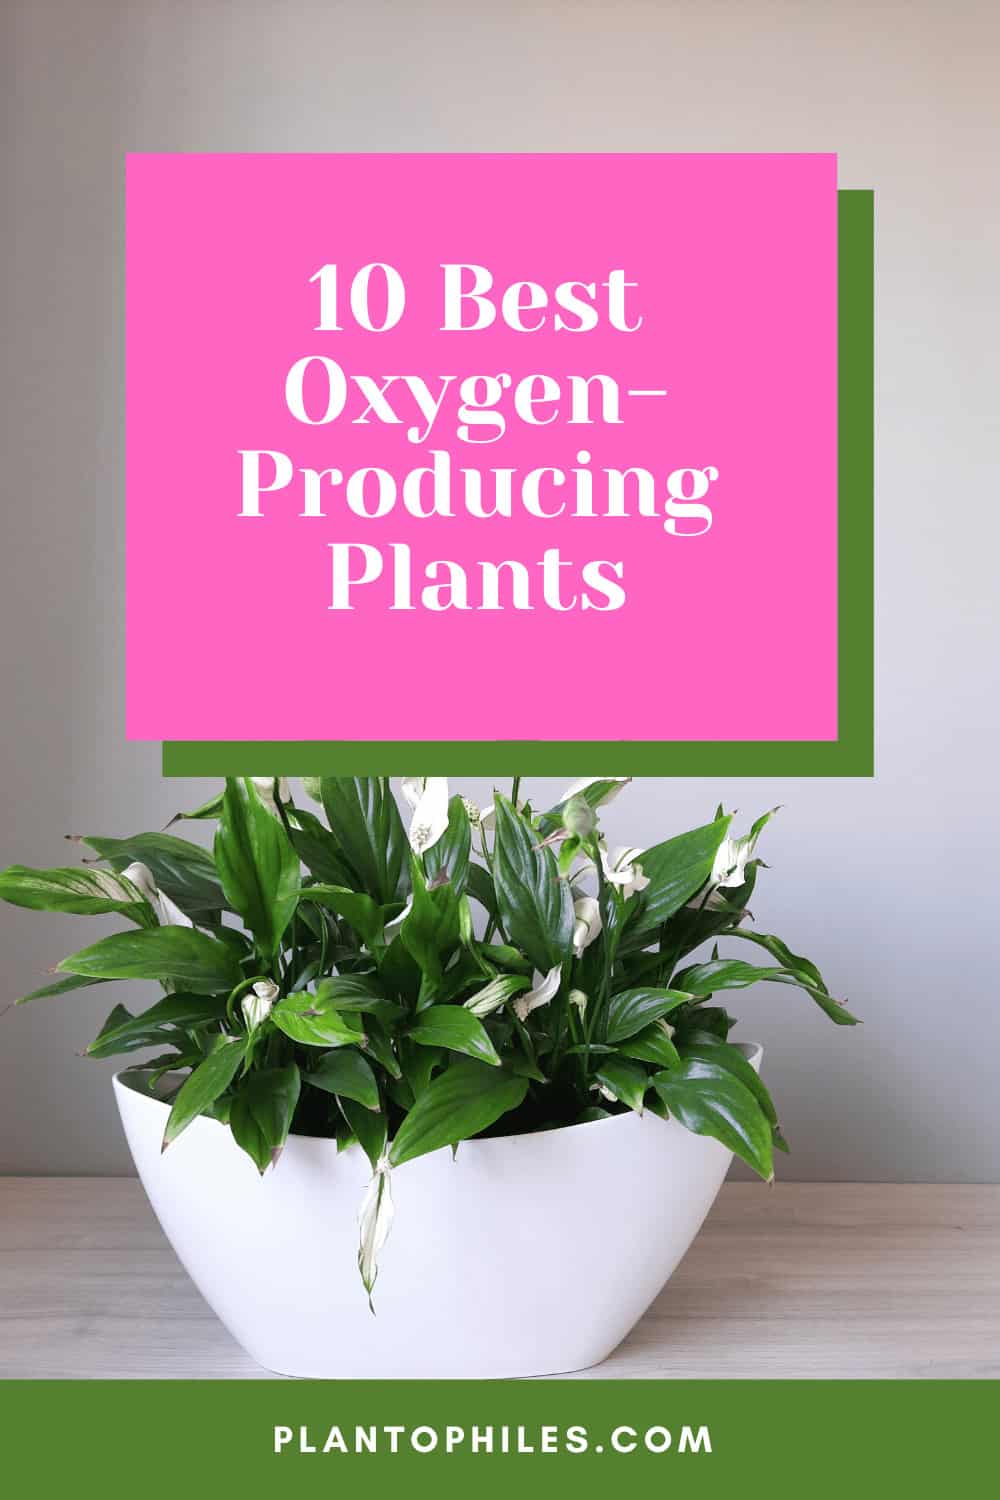 10 Best Oxygen-Producing Plants